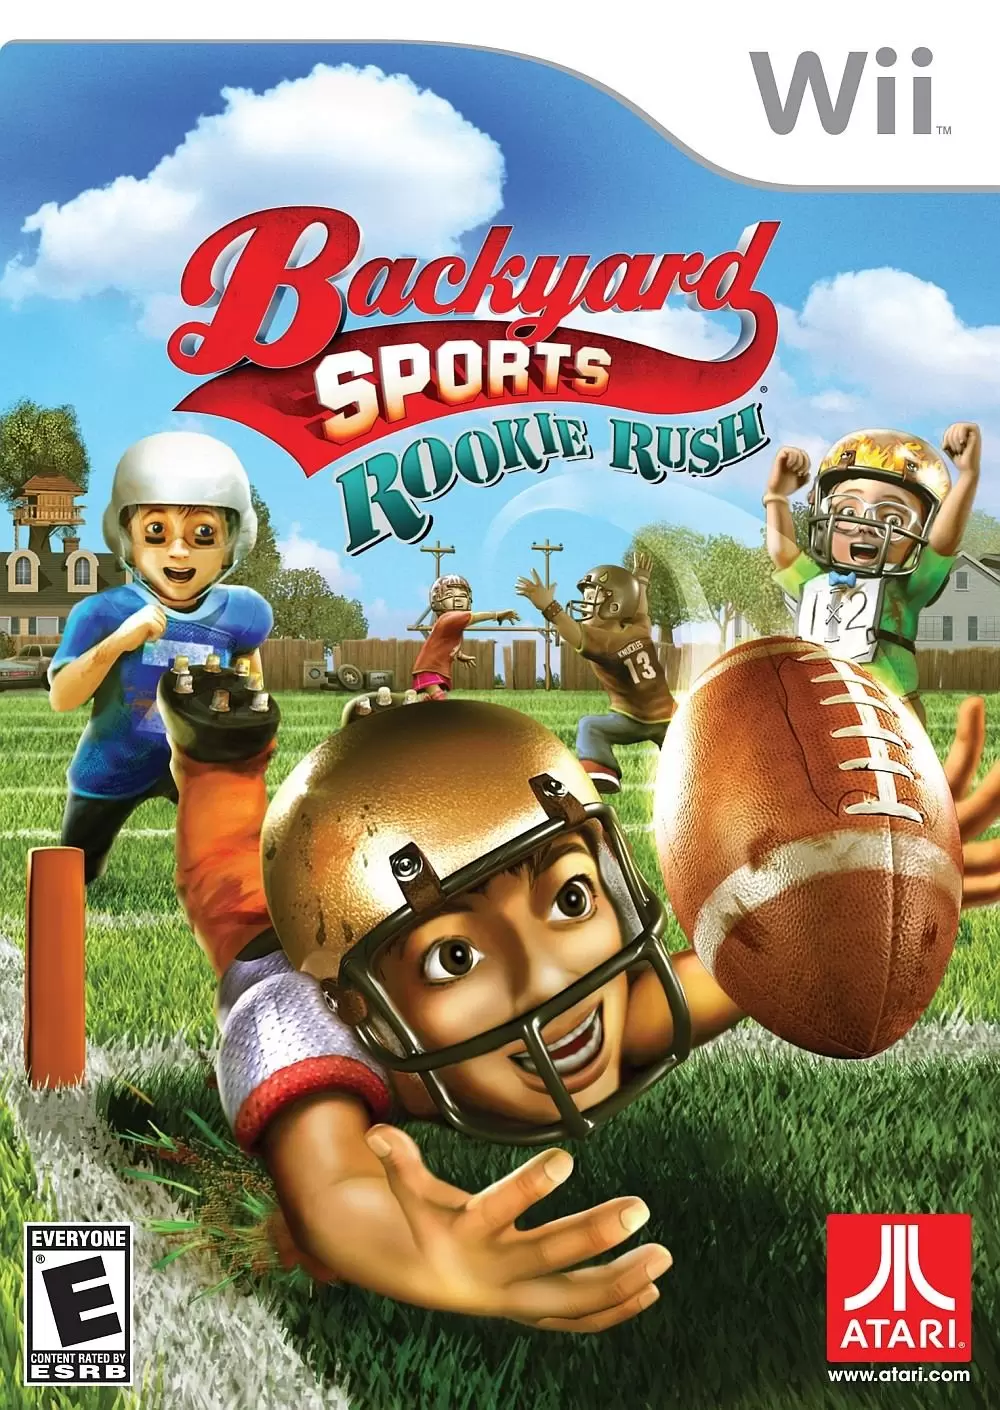 Nintendo Wii Games - Backyard Sports: Rookie Rush